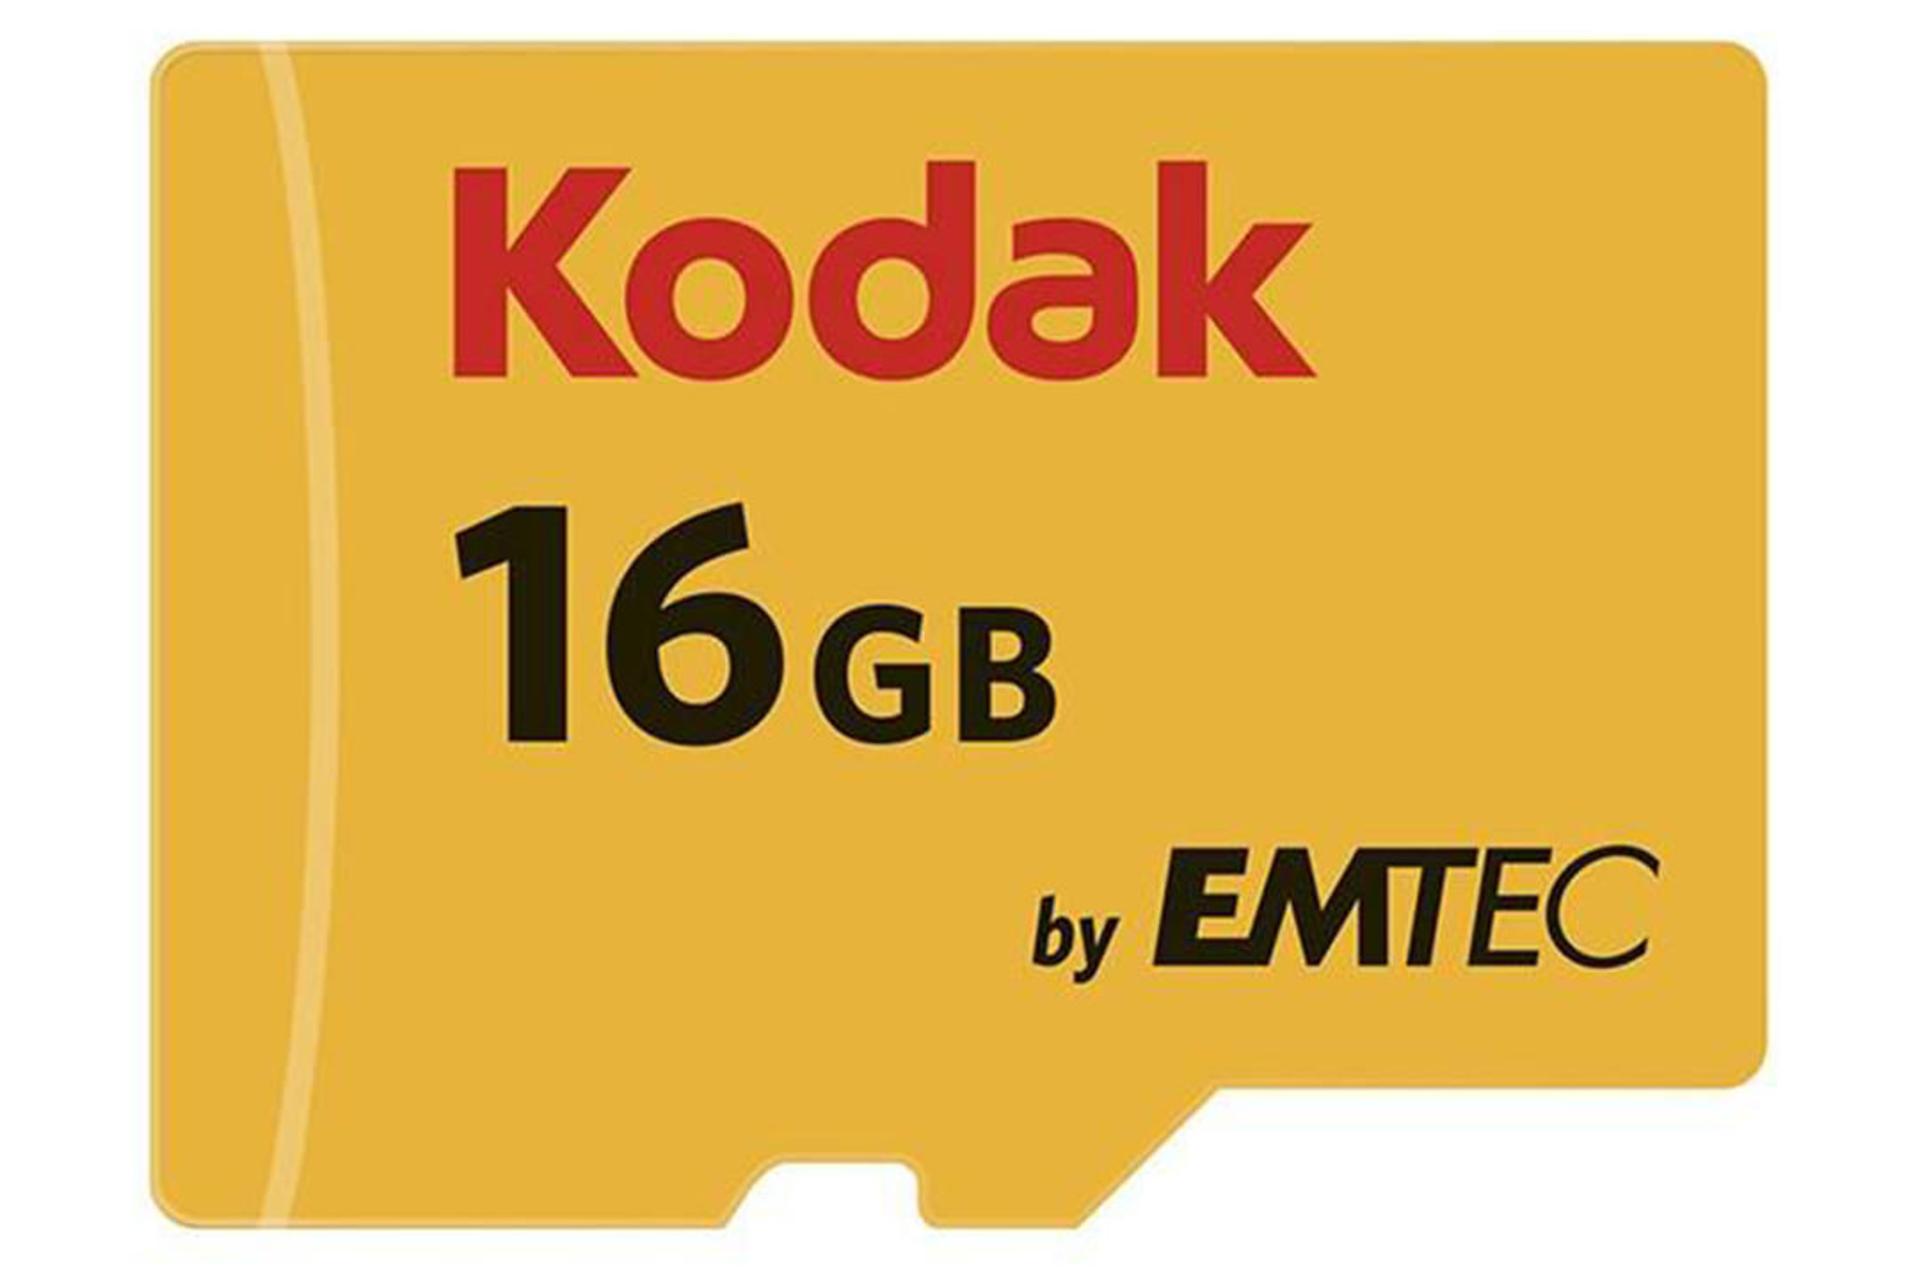 Emtec Kodak microSDHC Class 10 UHS-I U1 32GB